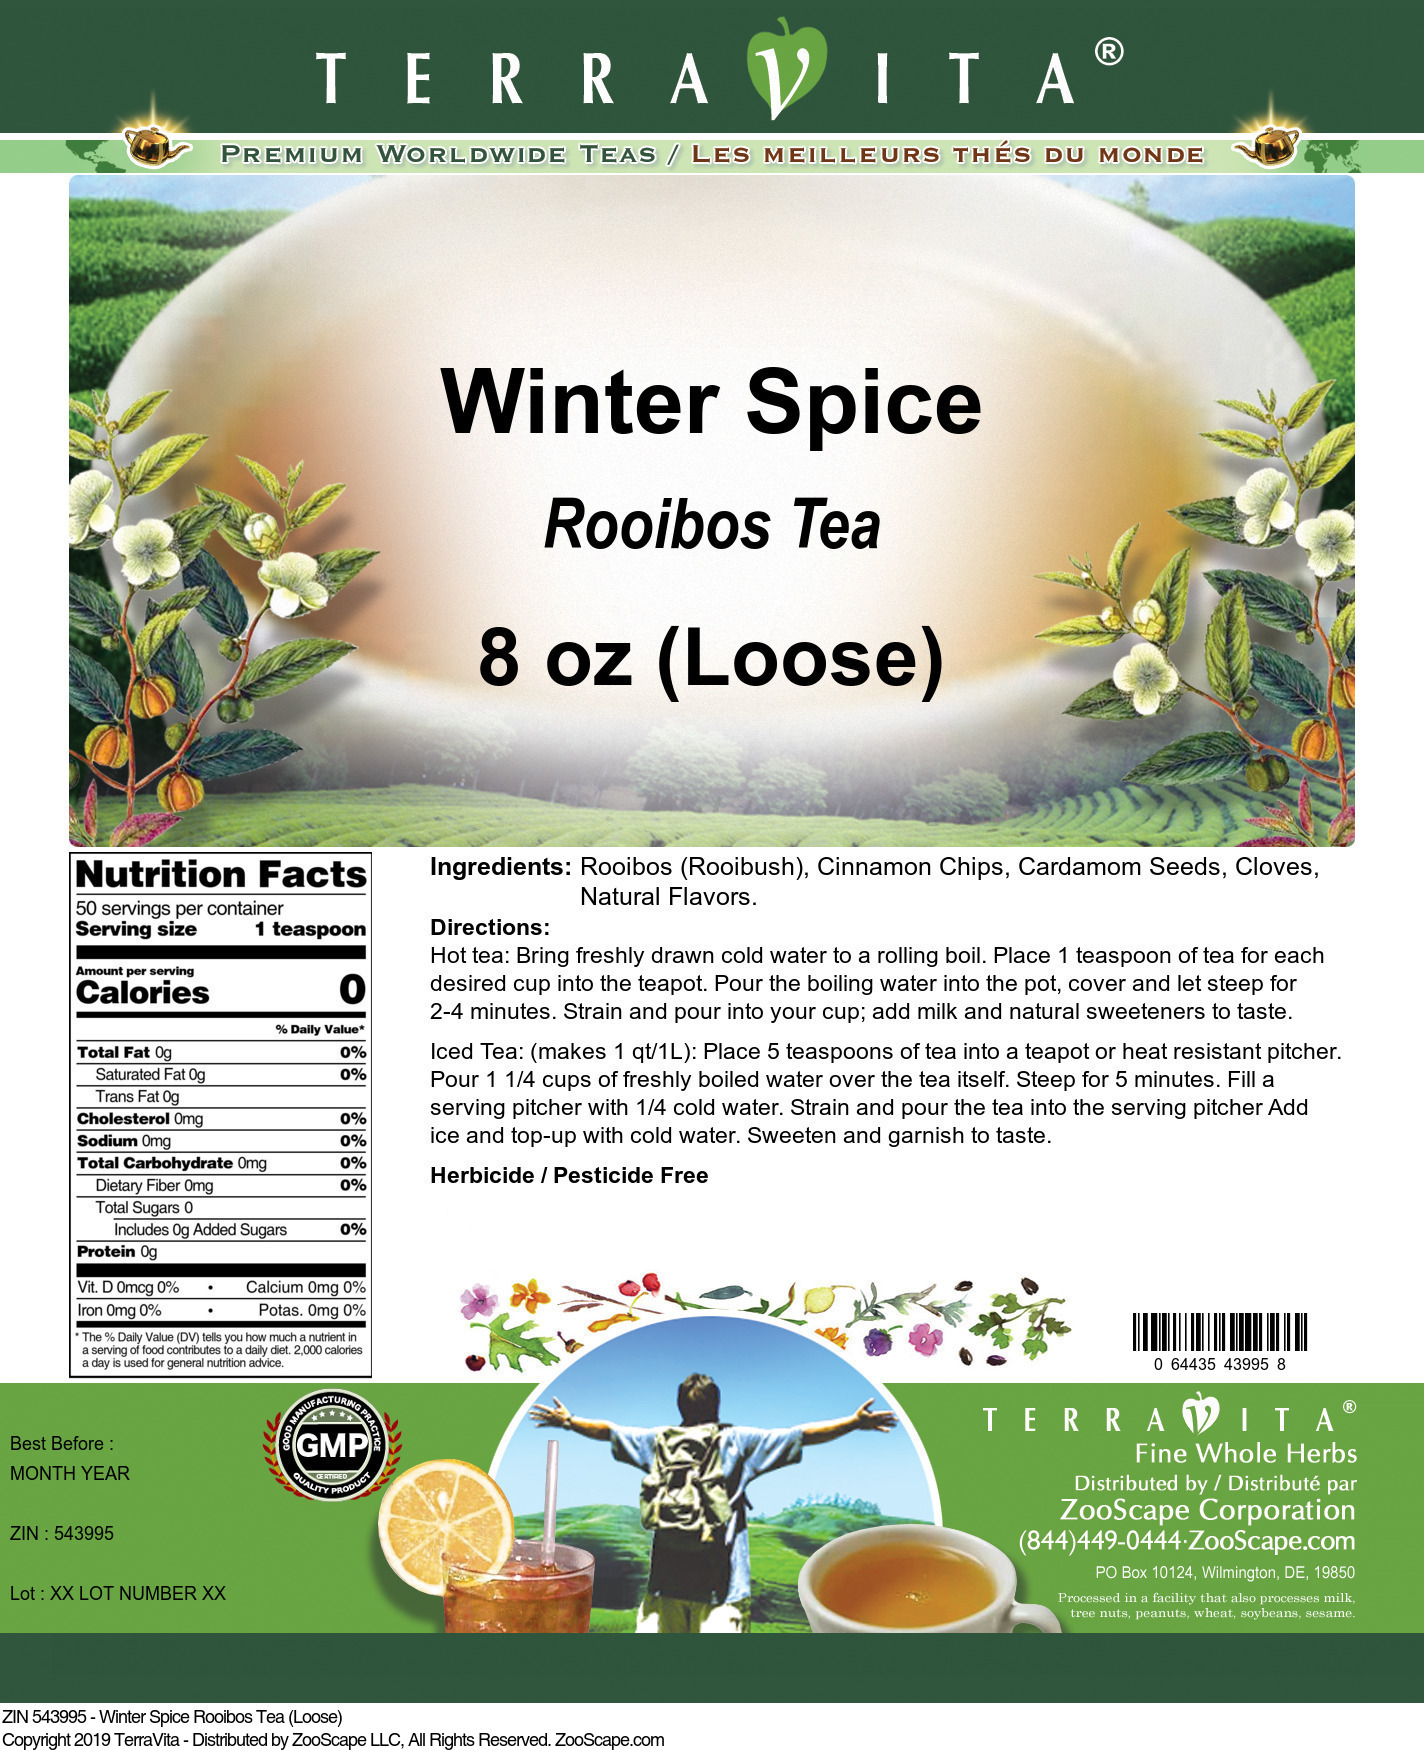 Winter Spice Rooibos Tea (Loose) - Label